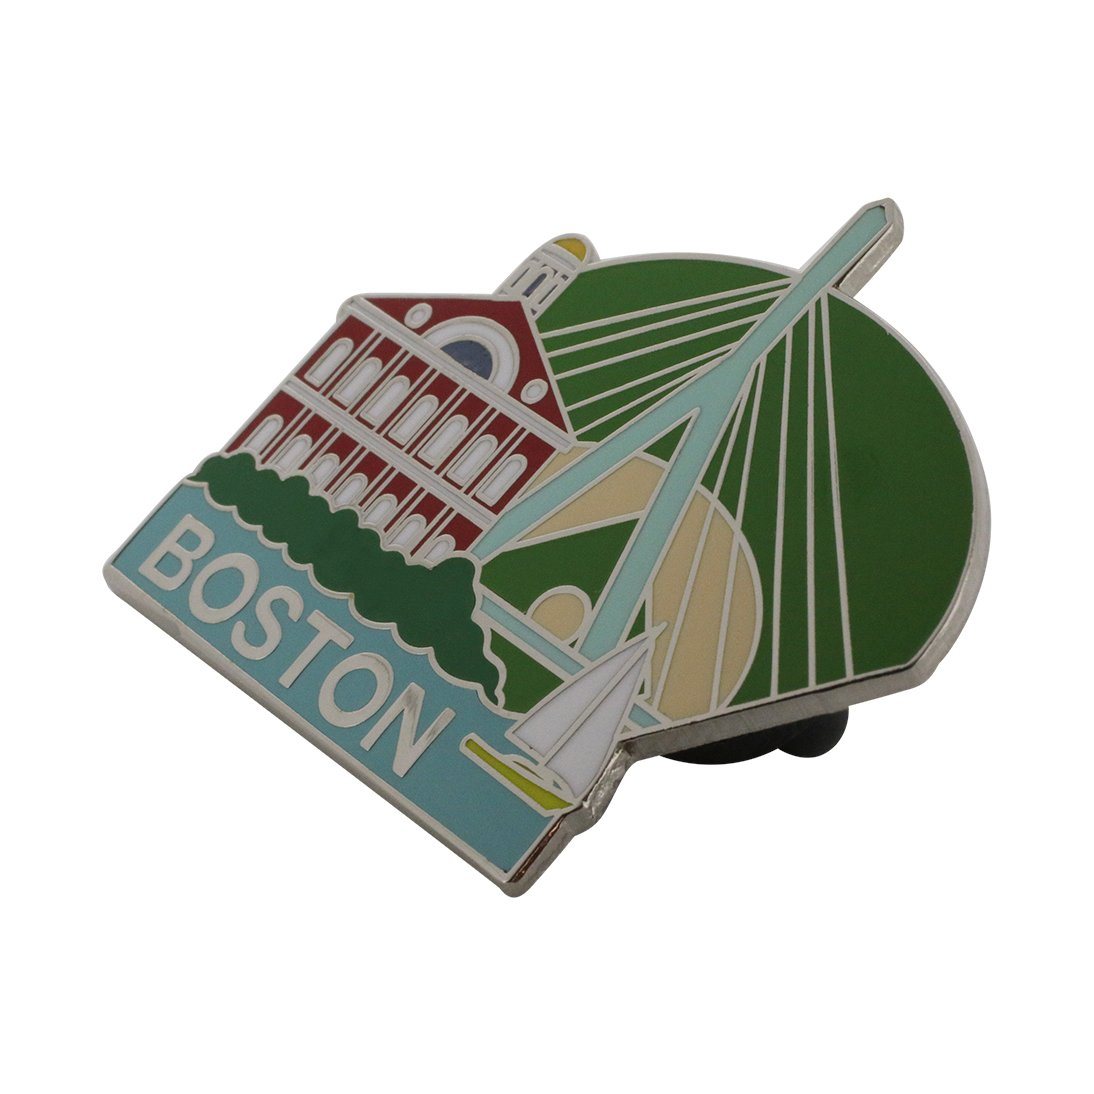 Boston Faneuil Hall Fenway Park Bay Souvenir Pin